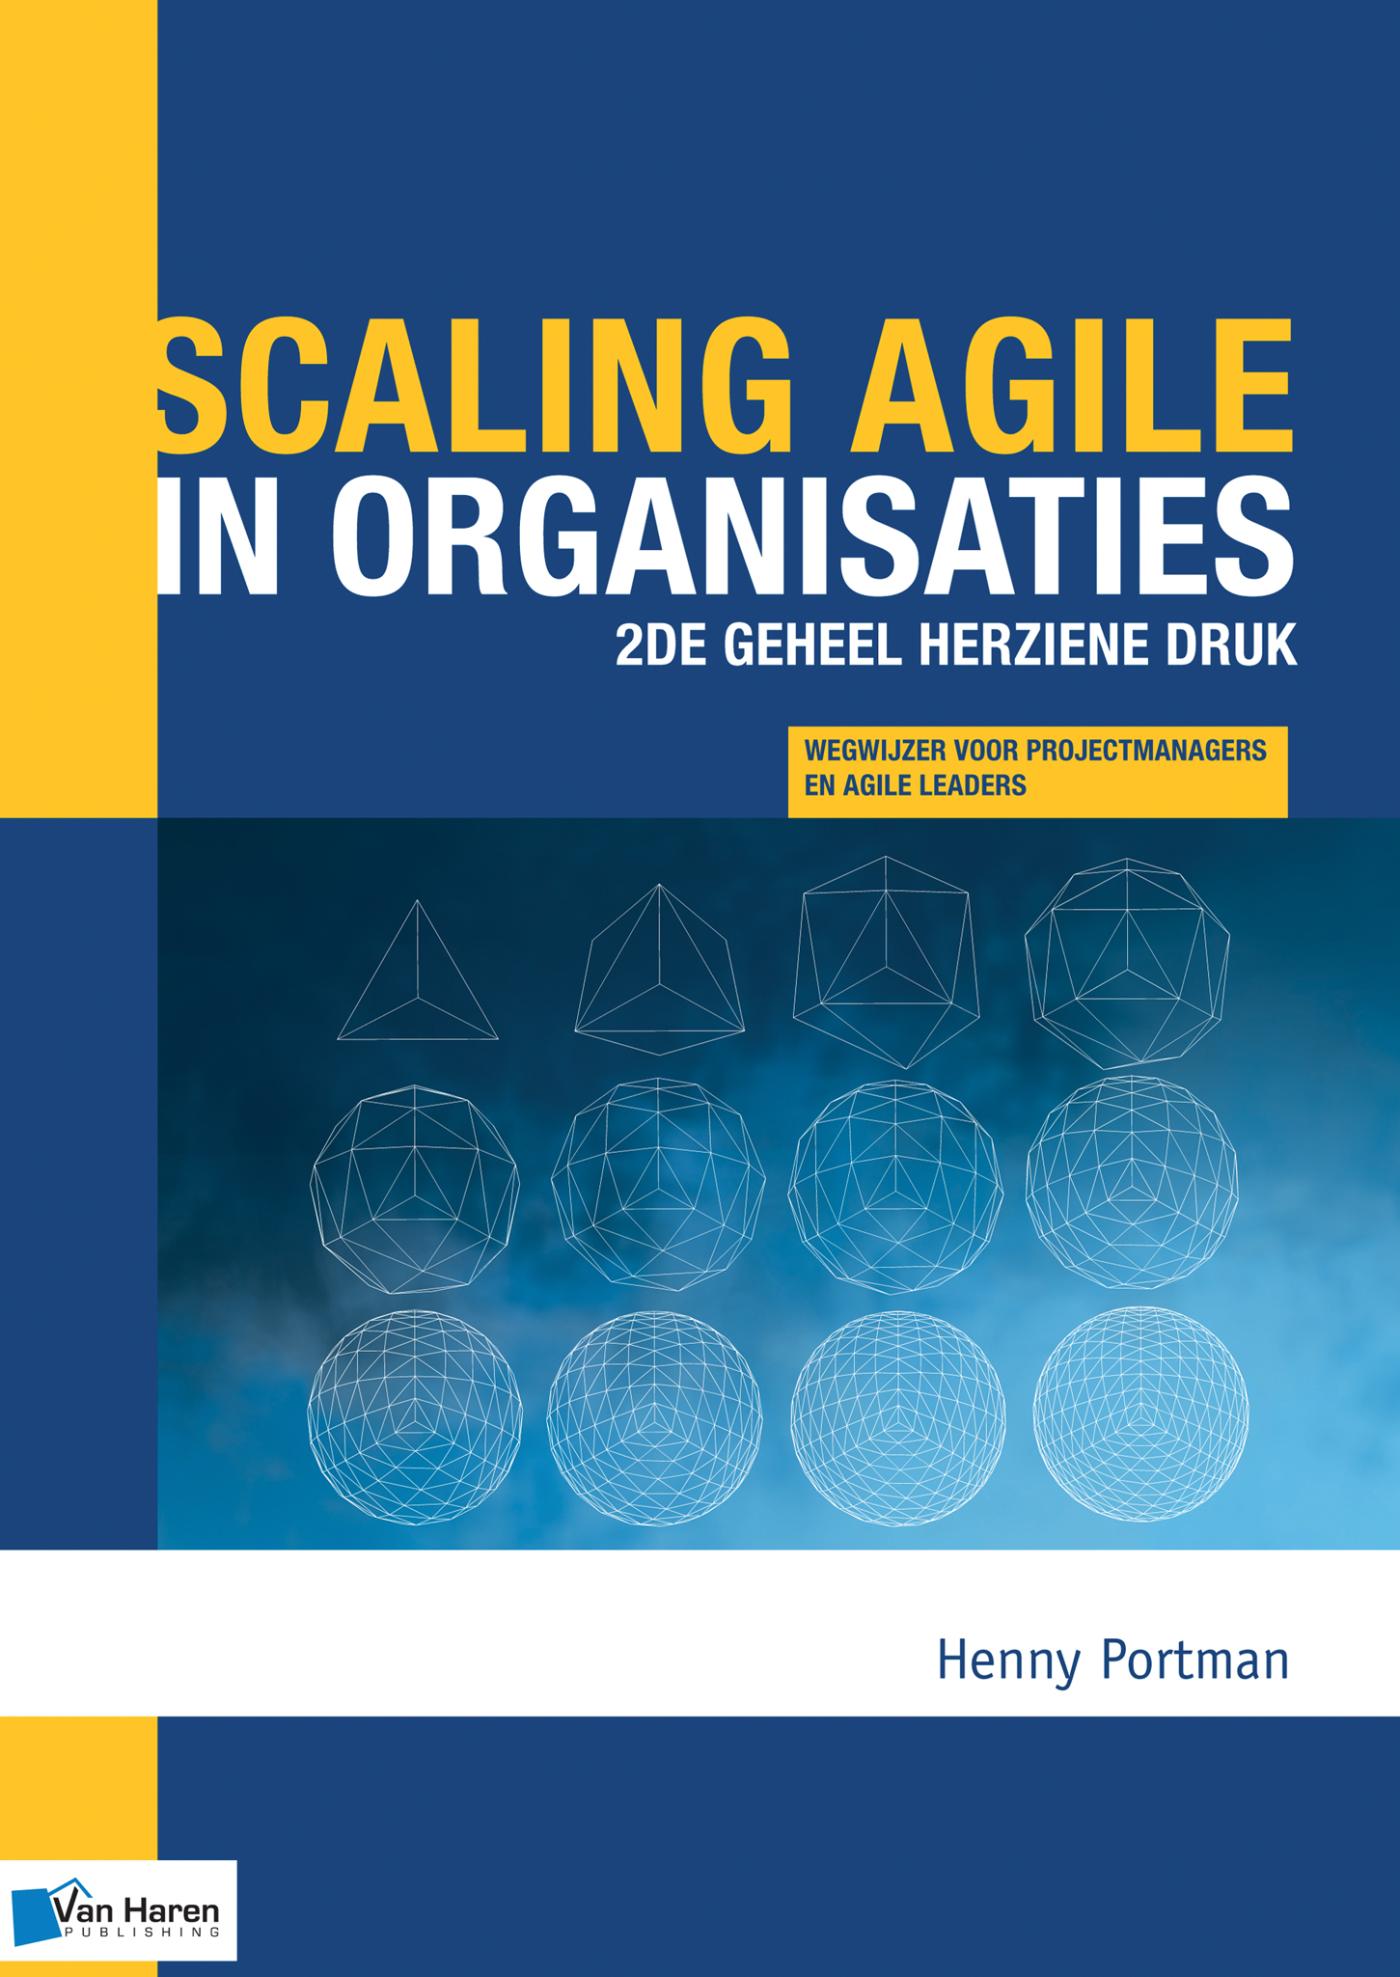 Scaling agile in organisaties (Ebook)